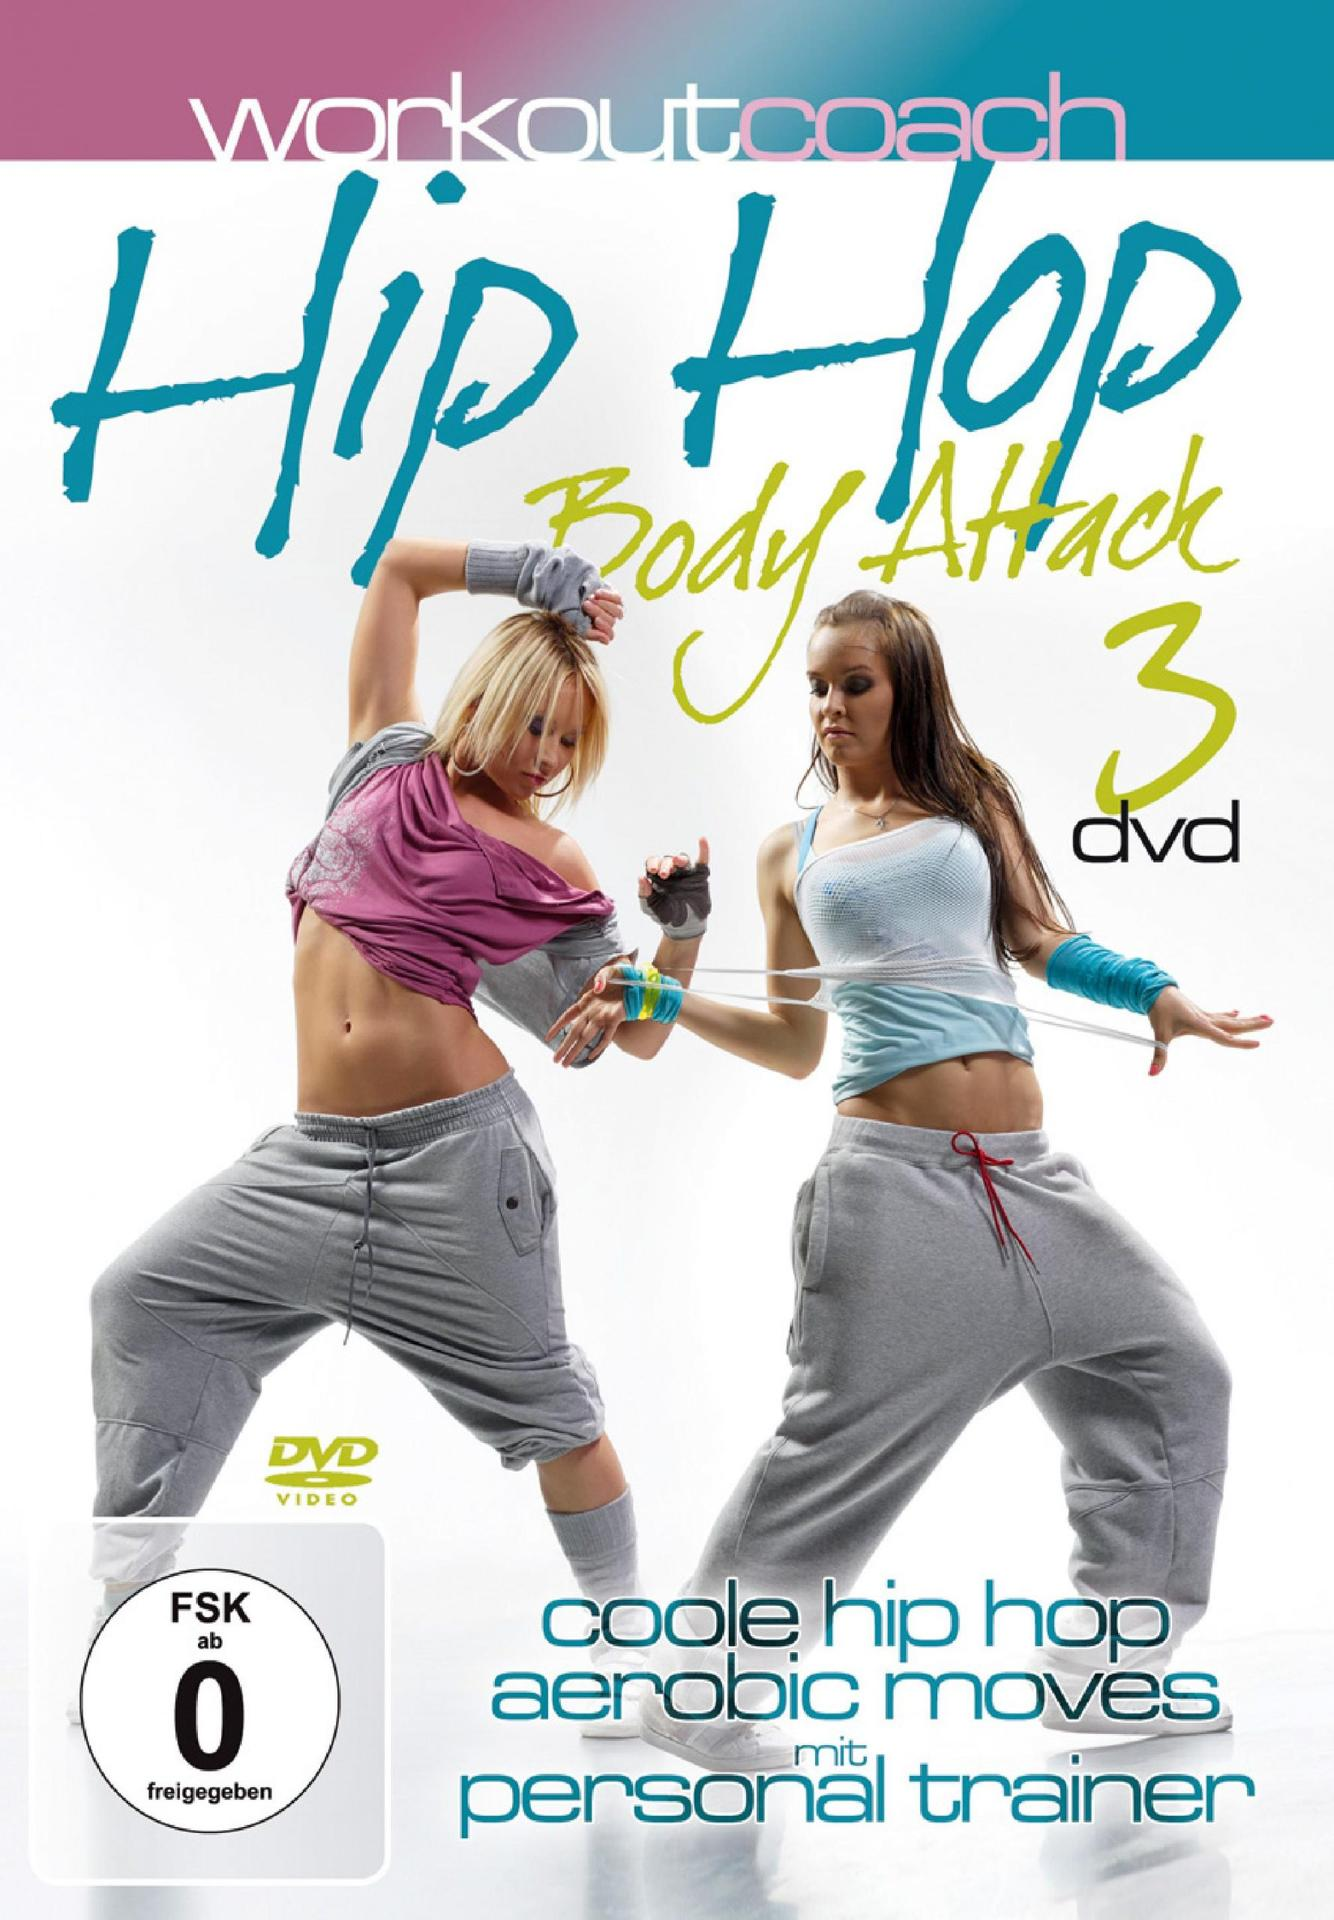 Workout Coach: Body DVD Attack Hip Hop